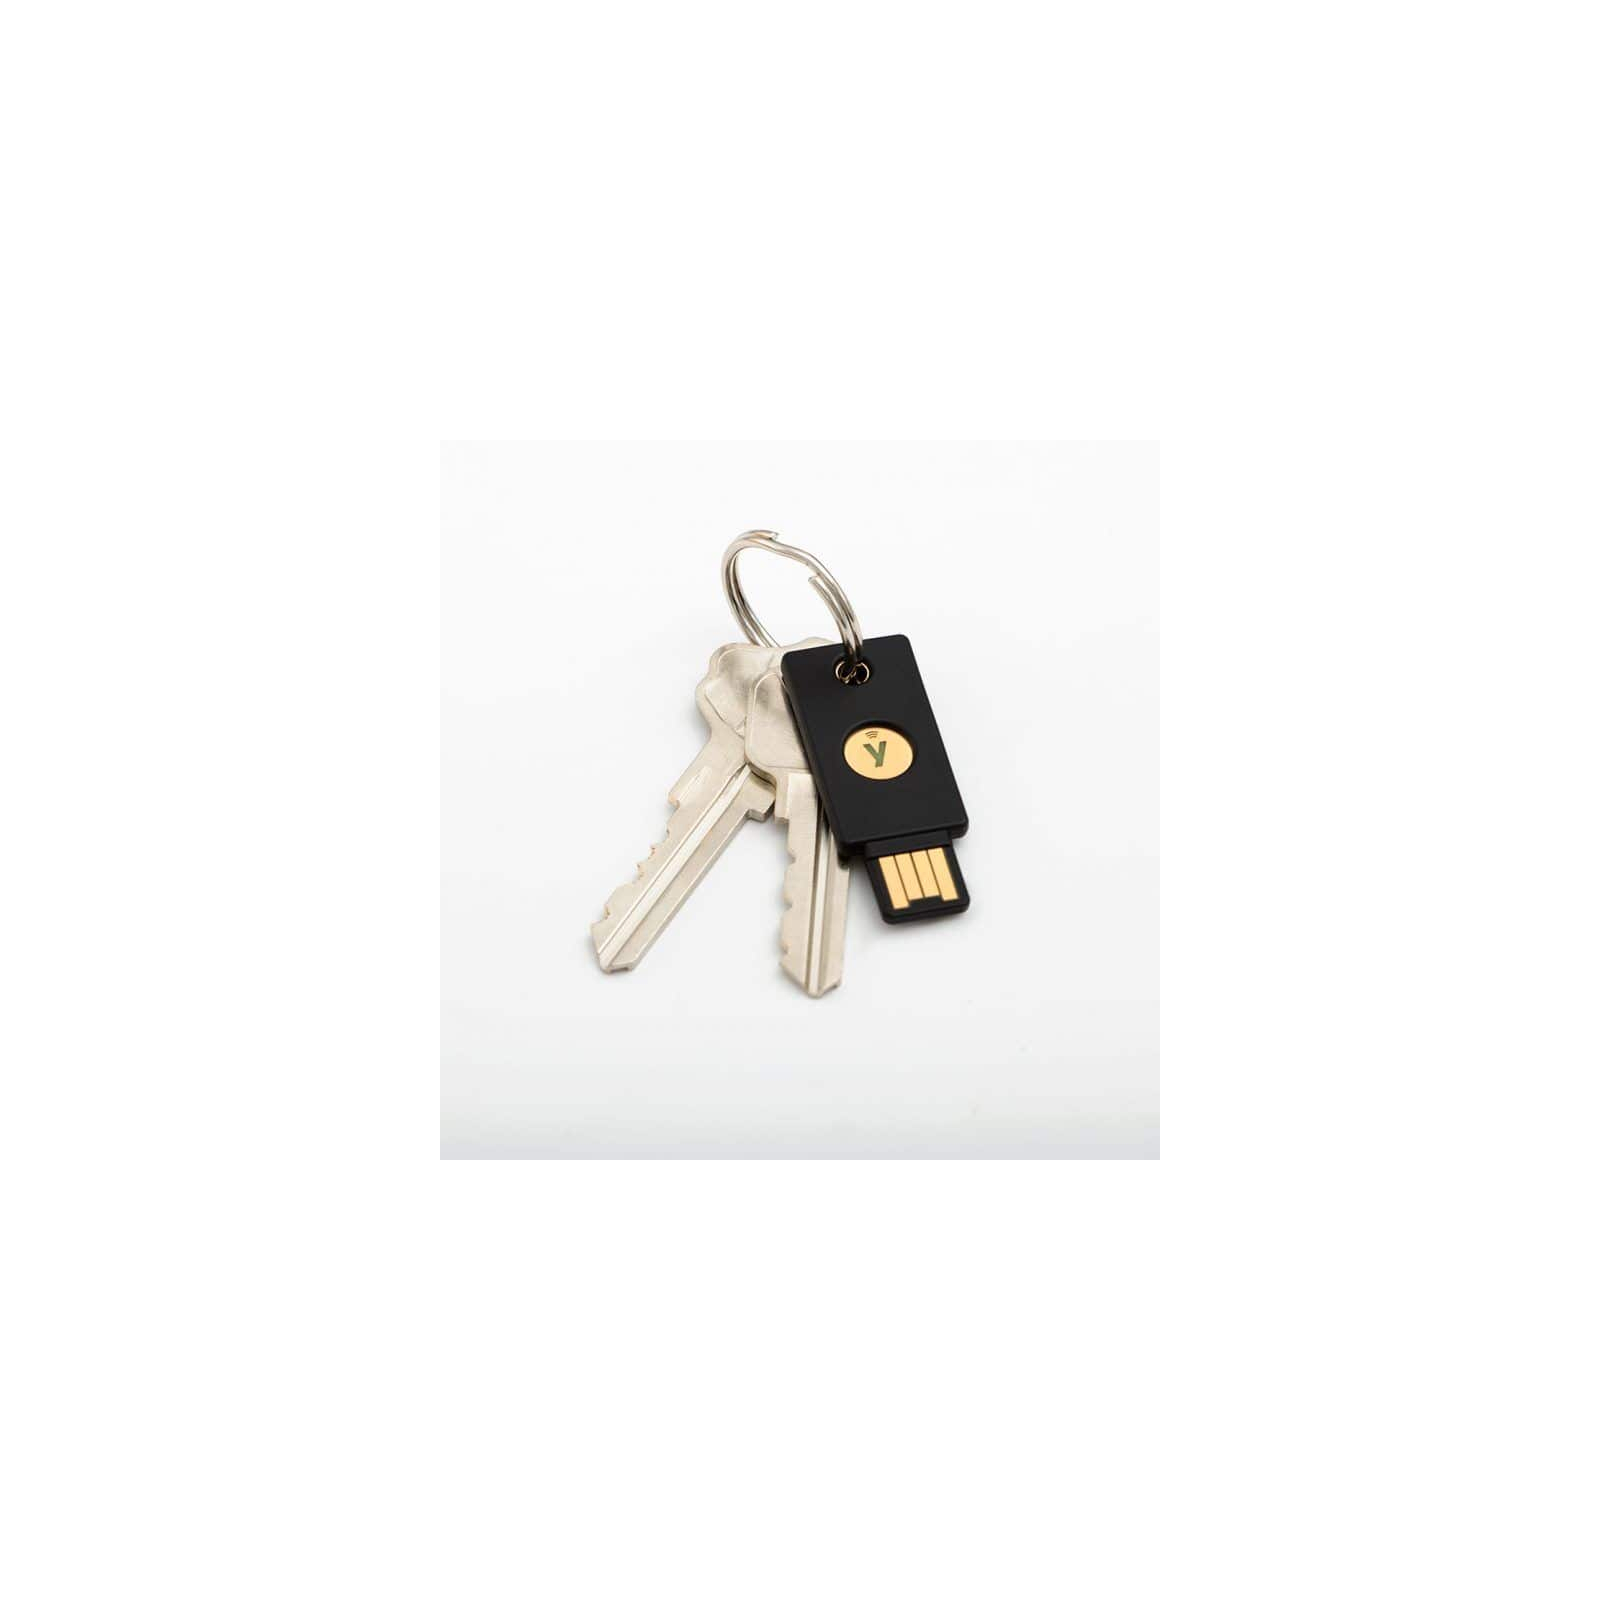 Апаратний ключ безпеки Yubico YubiKey 5 NFC (YubiKey_5_NFC) зображення 2